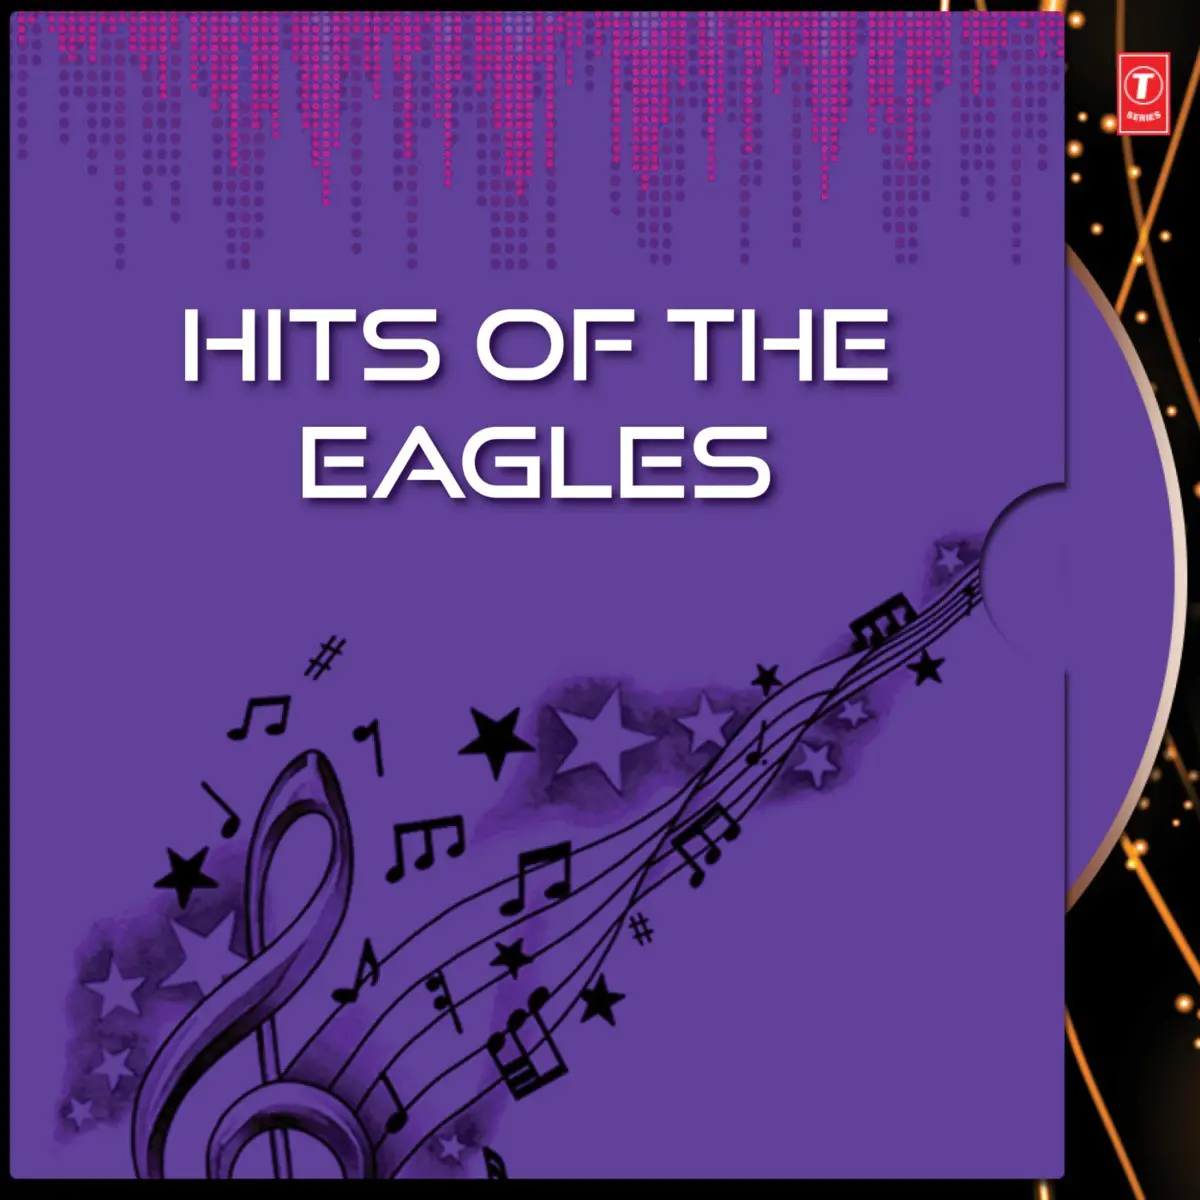 Hotel California Lyrics In English Hits Of The Eagles Hotel California Song Lyrics In English Free Online On Gaana Com